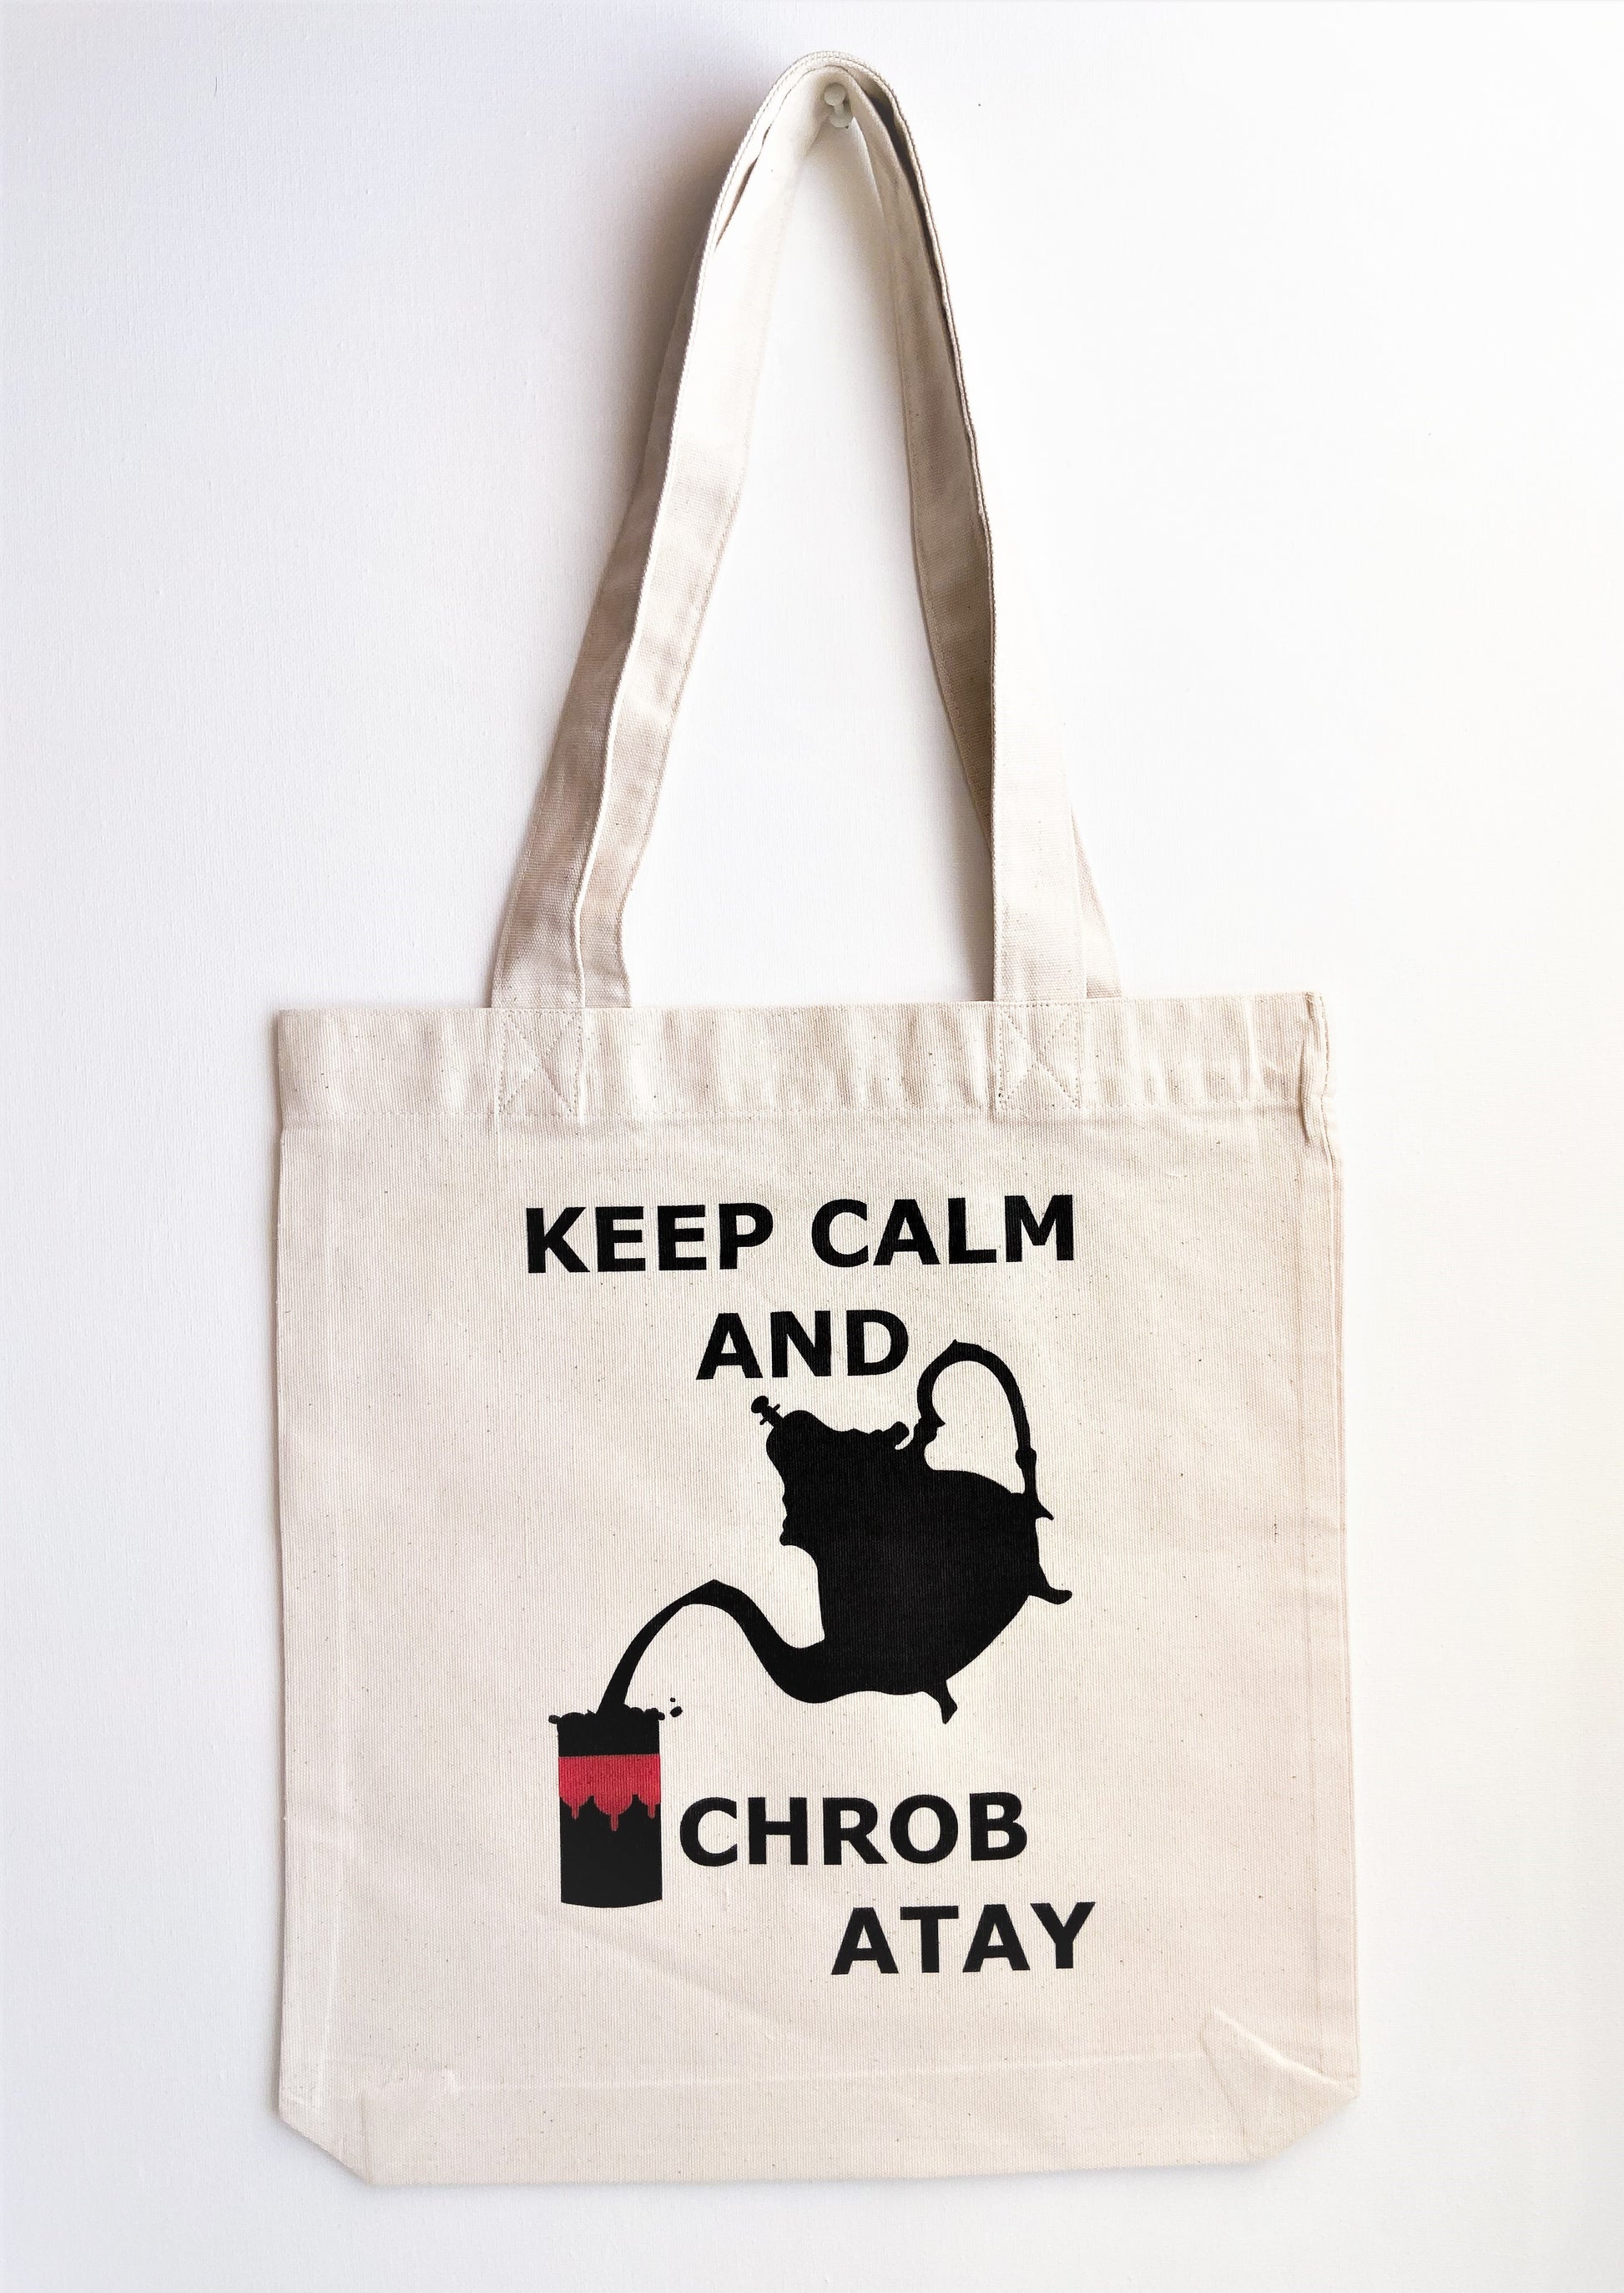 Tote bag "Keep calm and chrob atay" - Ghazel Boutique